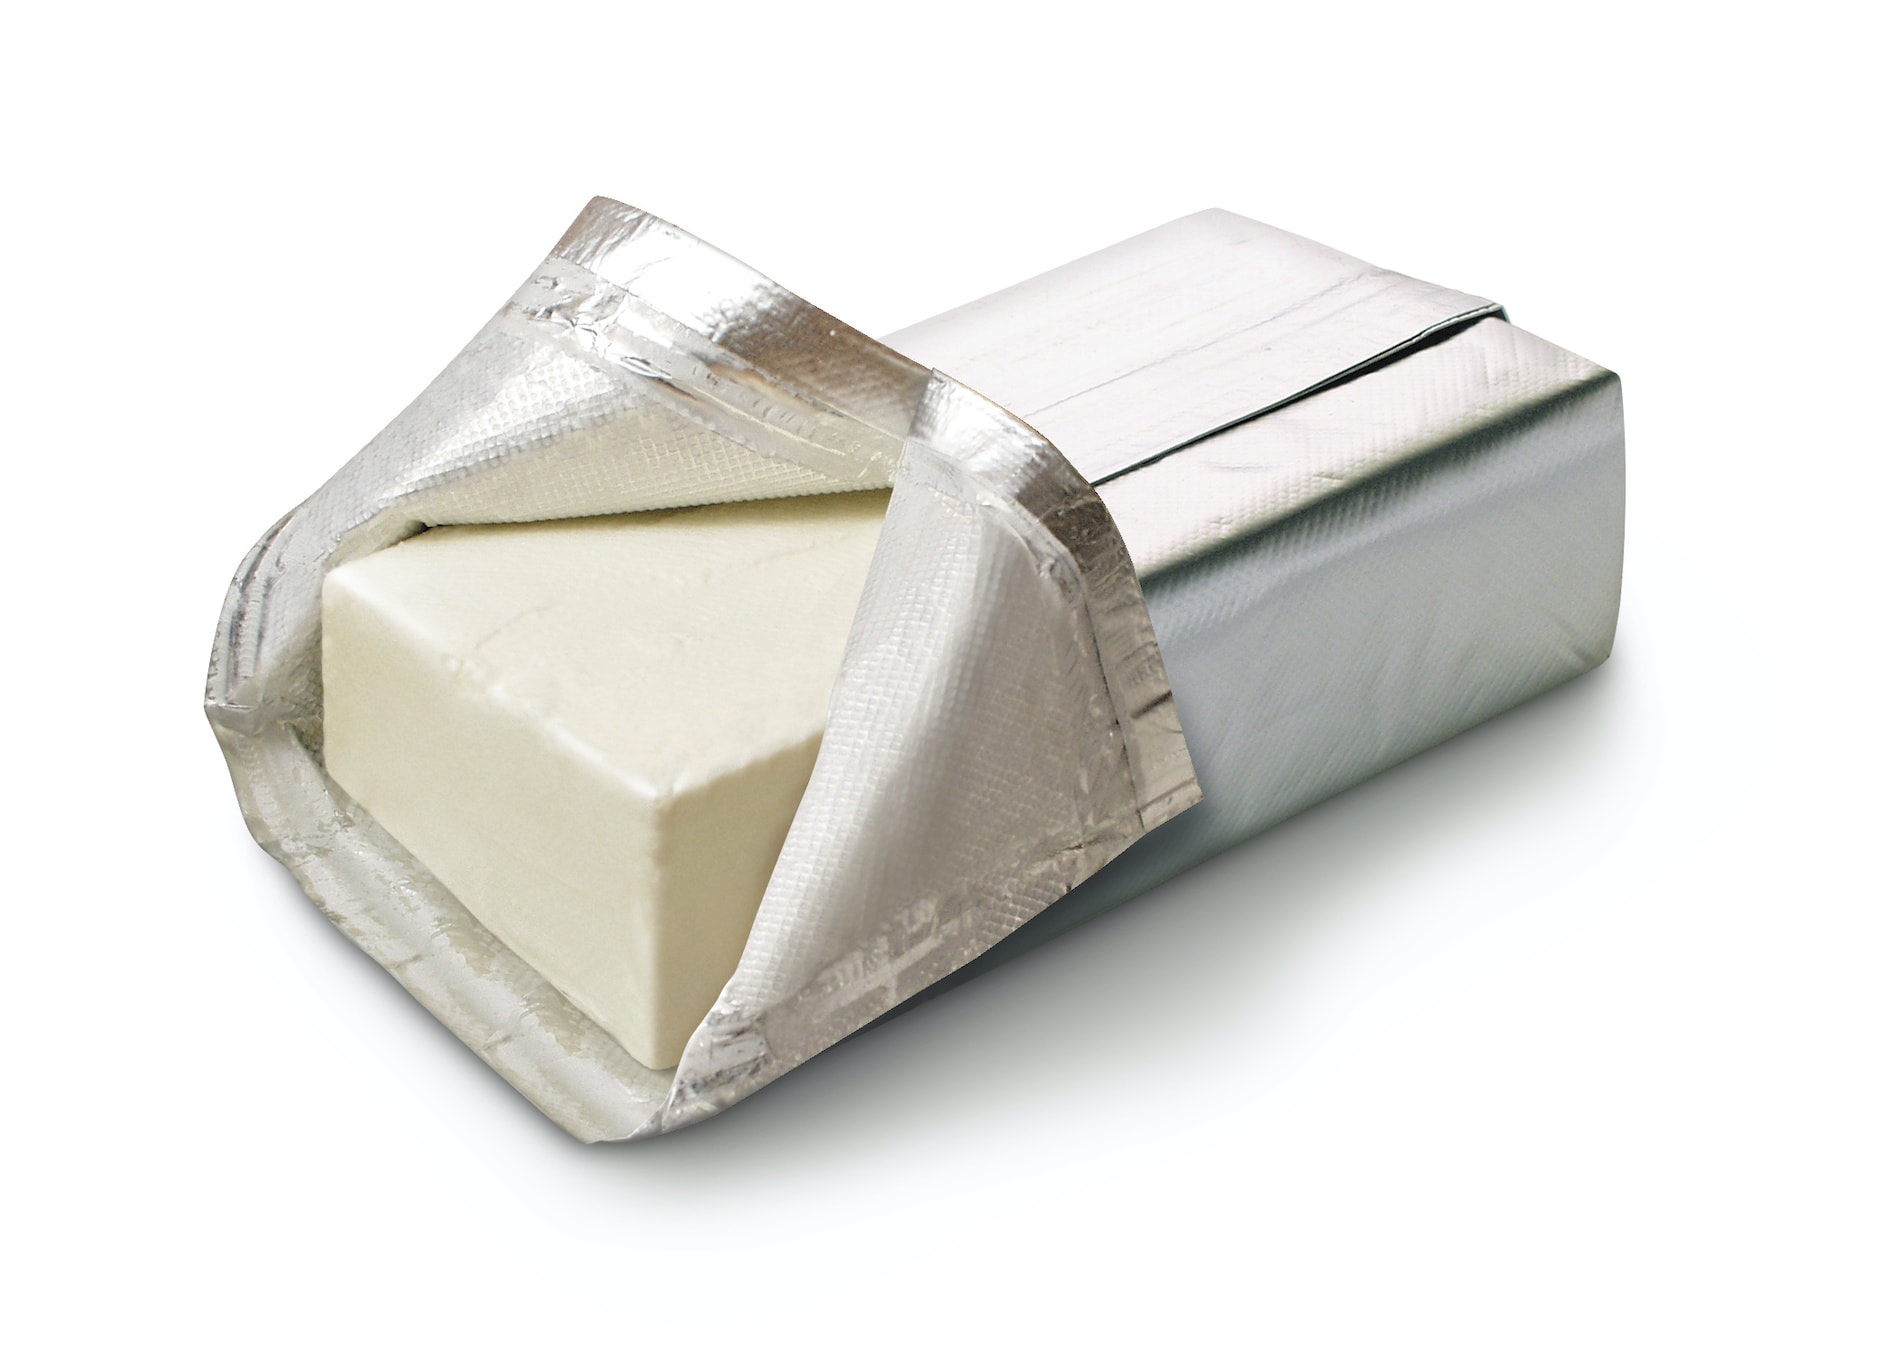 brick of cream cheese on white background